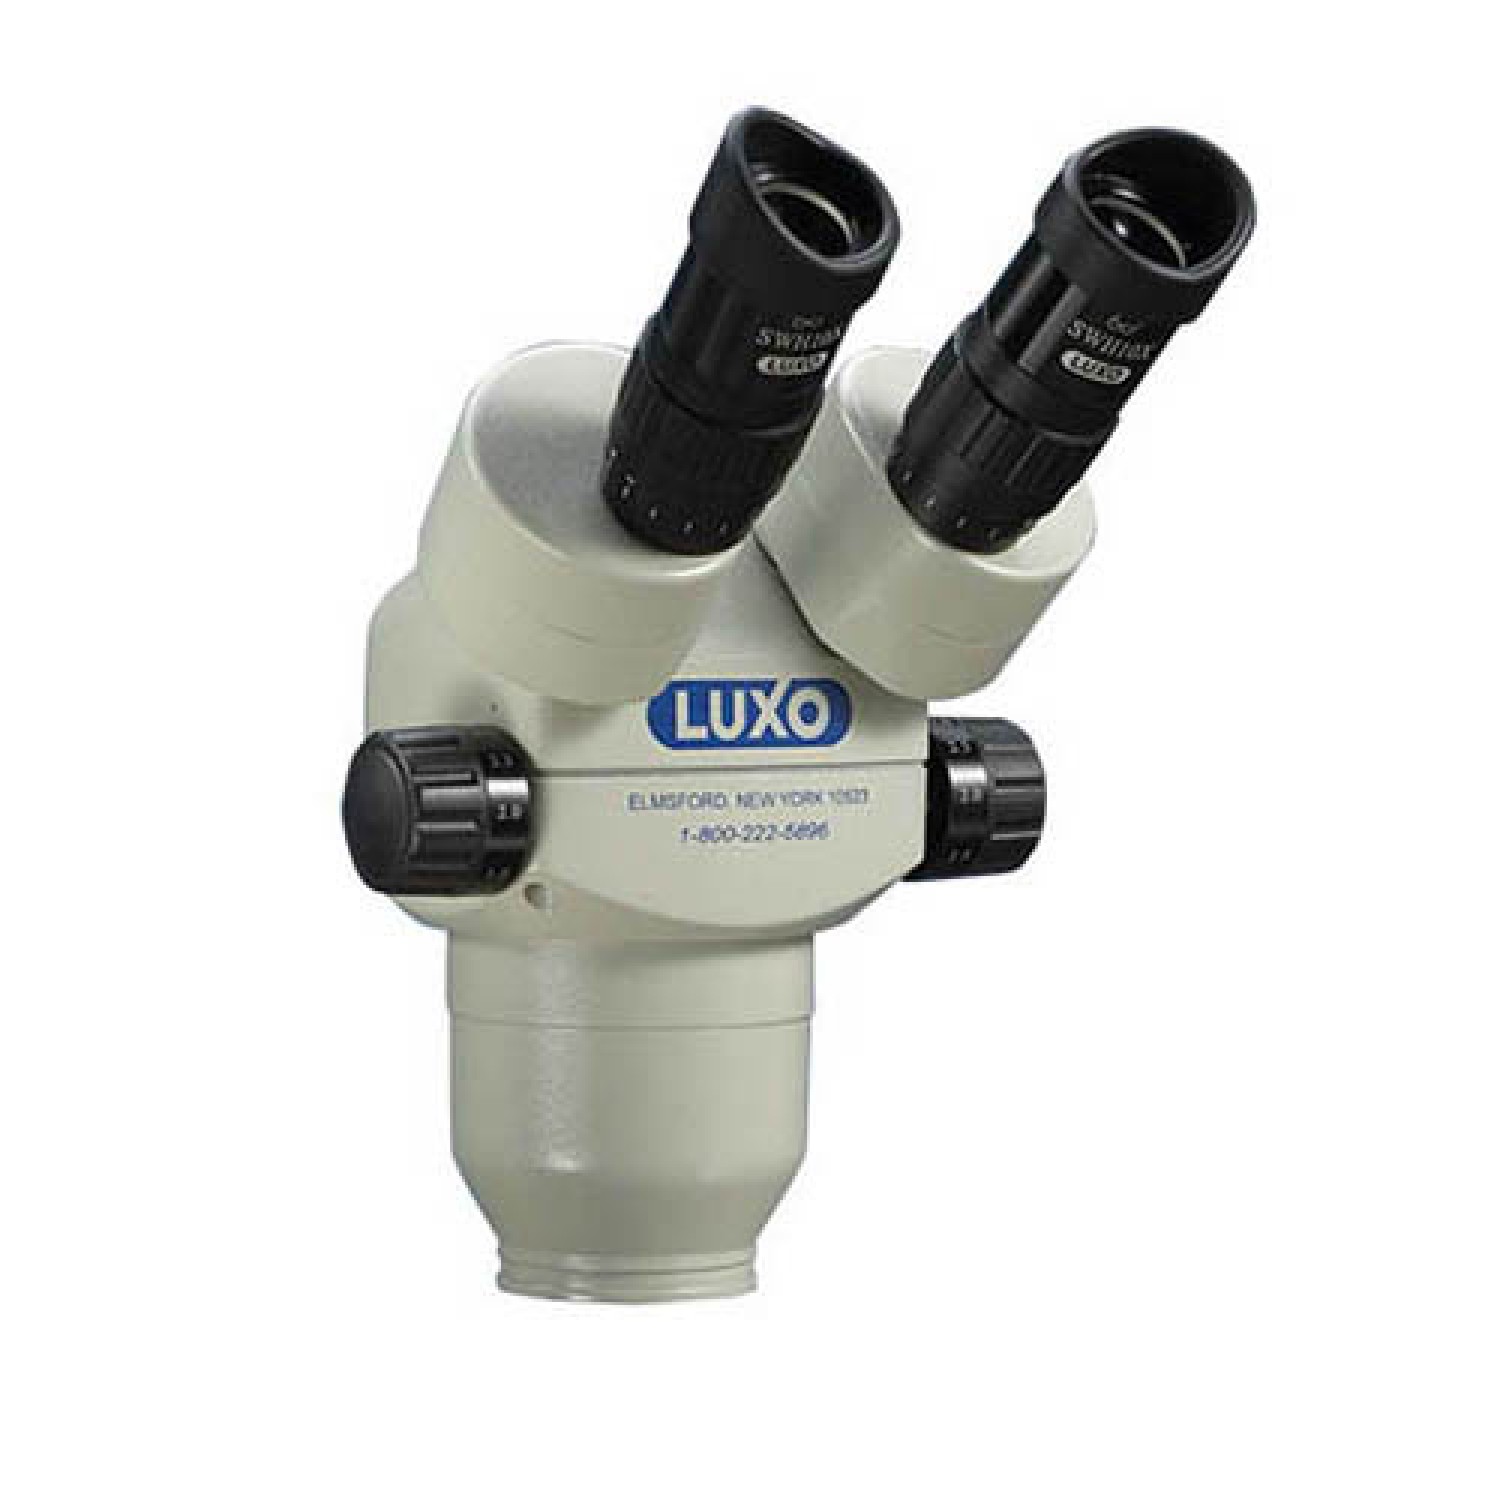 Luxo 23700 Microscope Side View